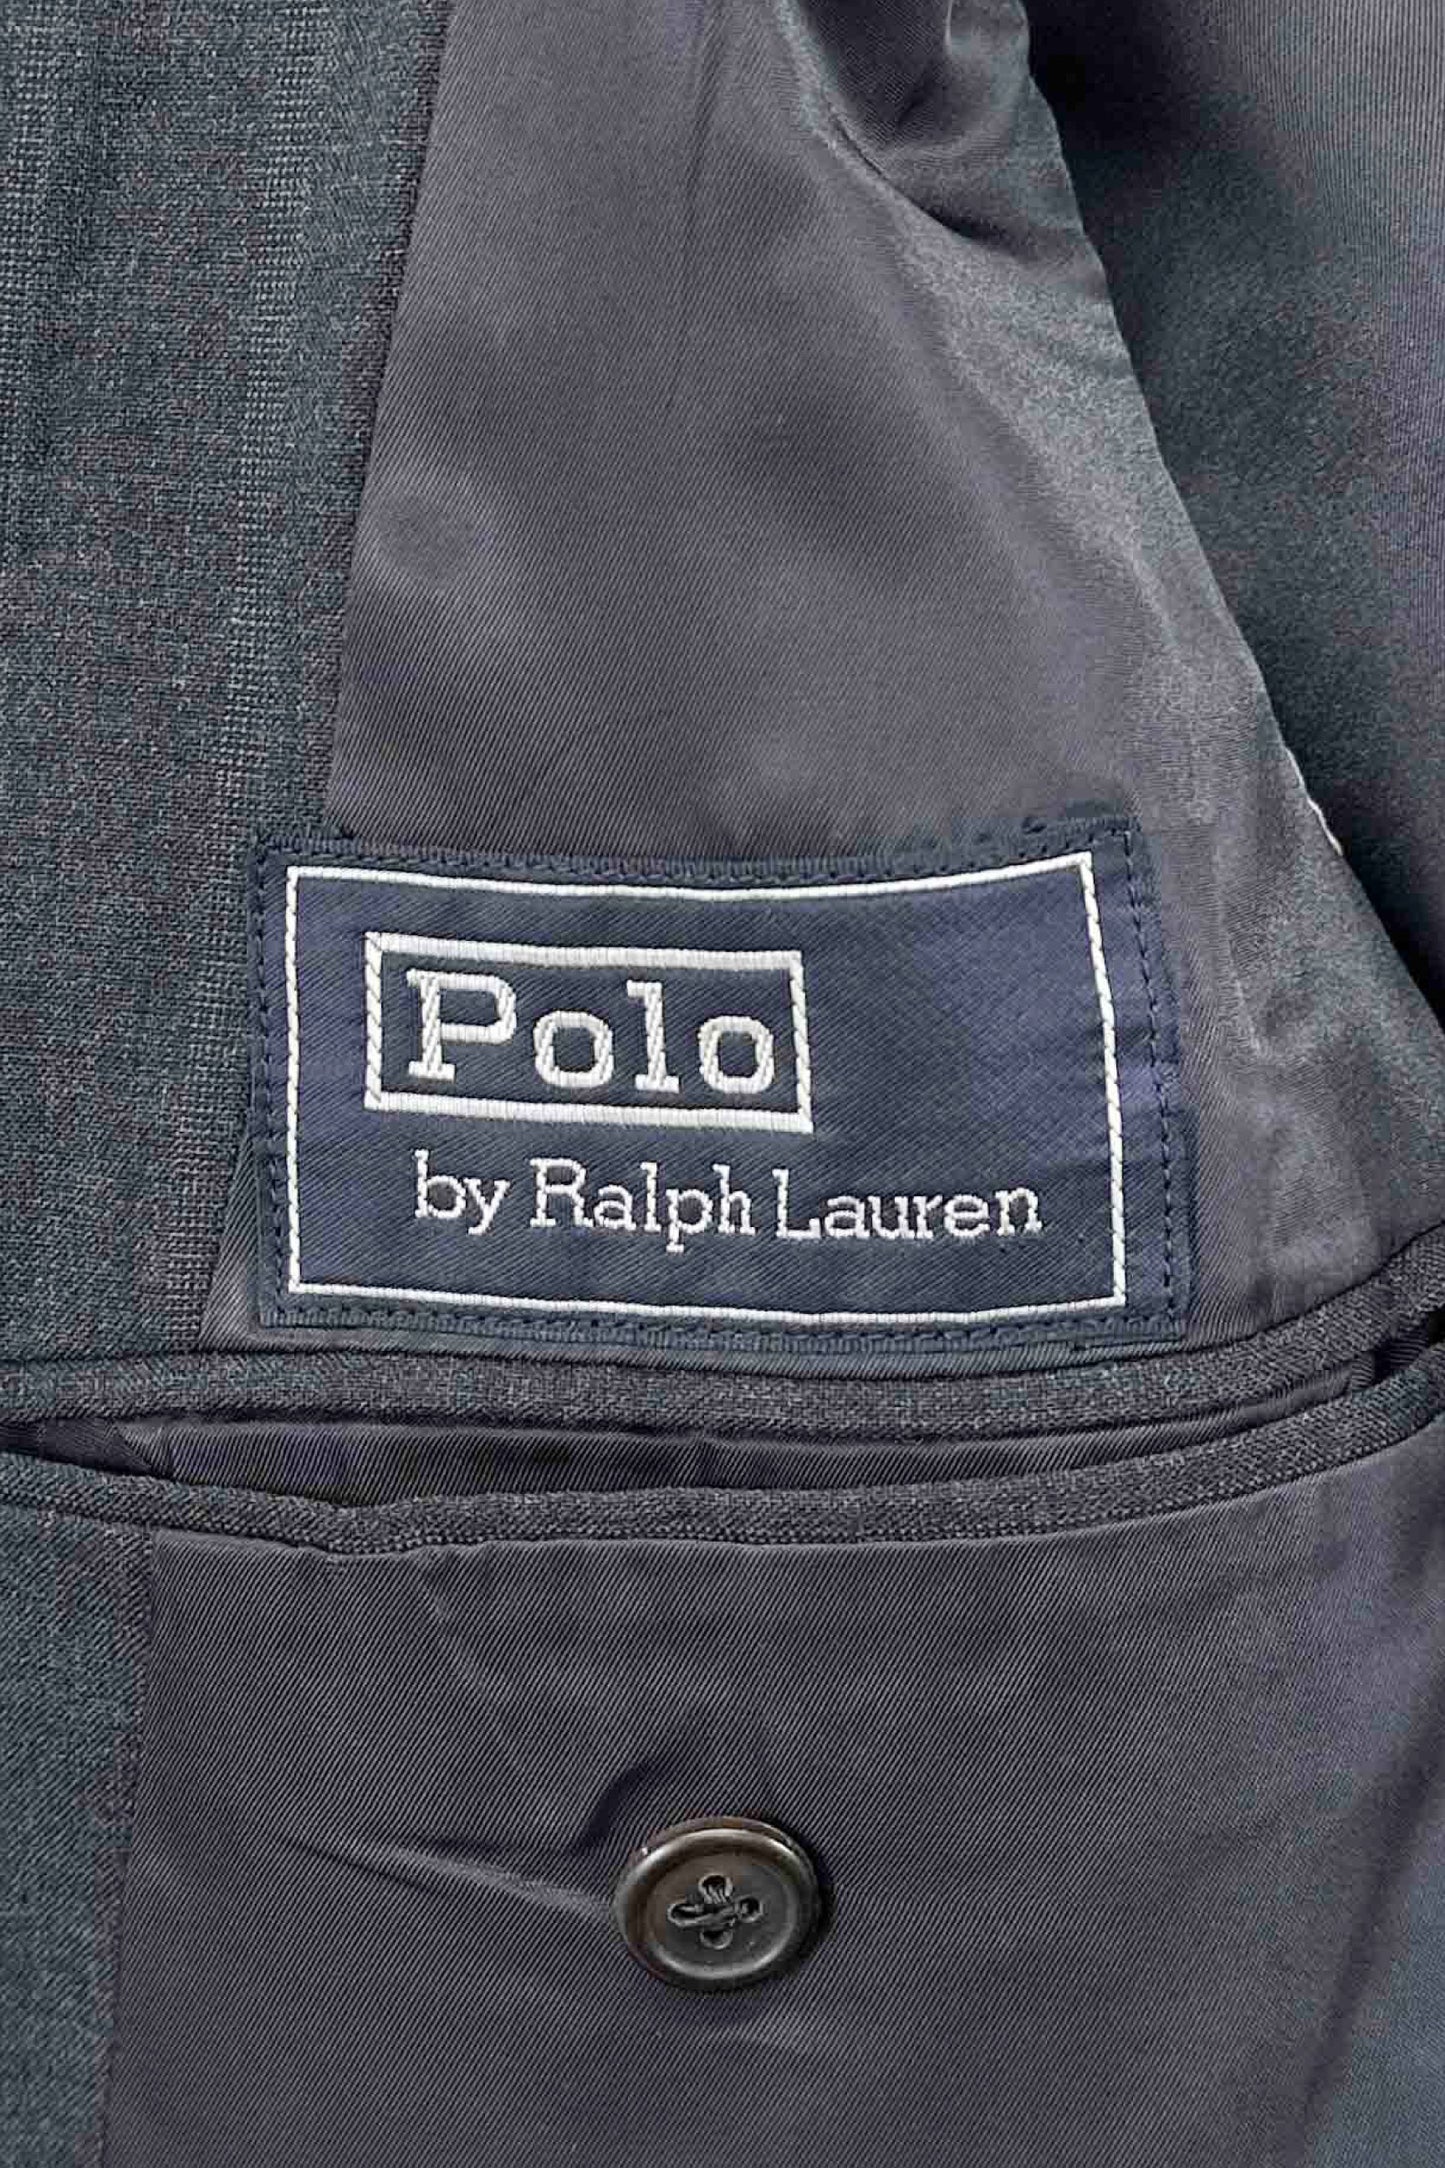 Polo by Ralph Lauren 条纹套装